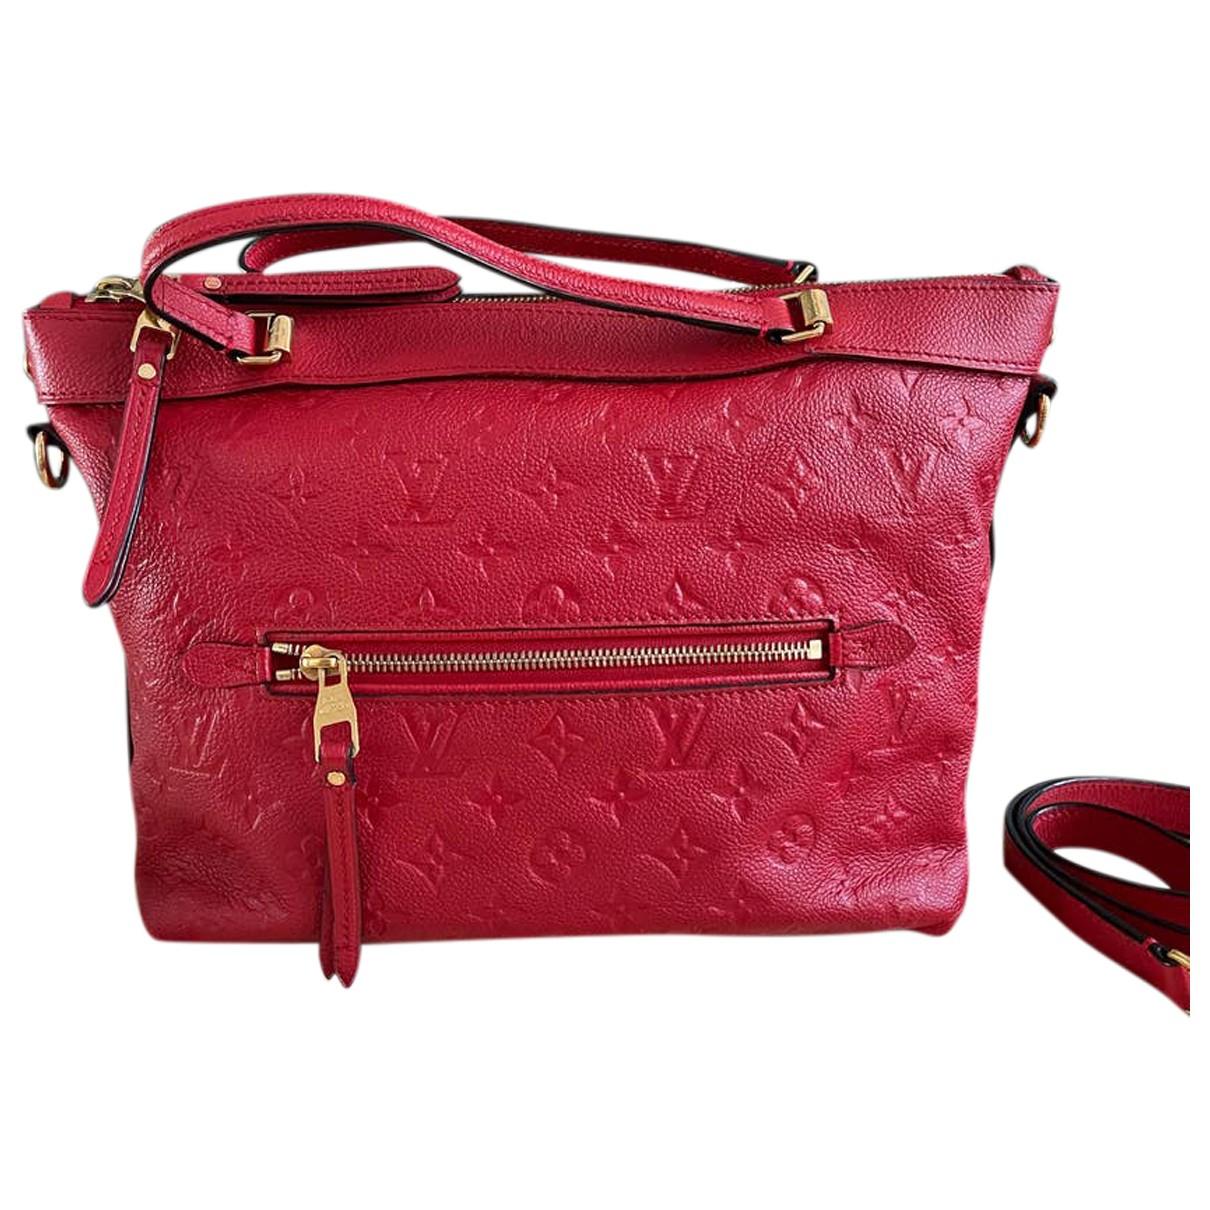 Bastille leather handbag